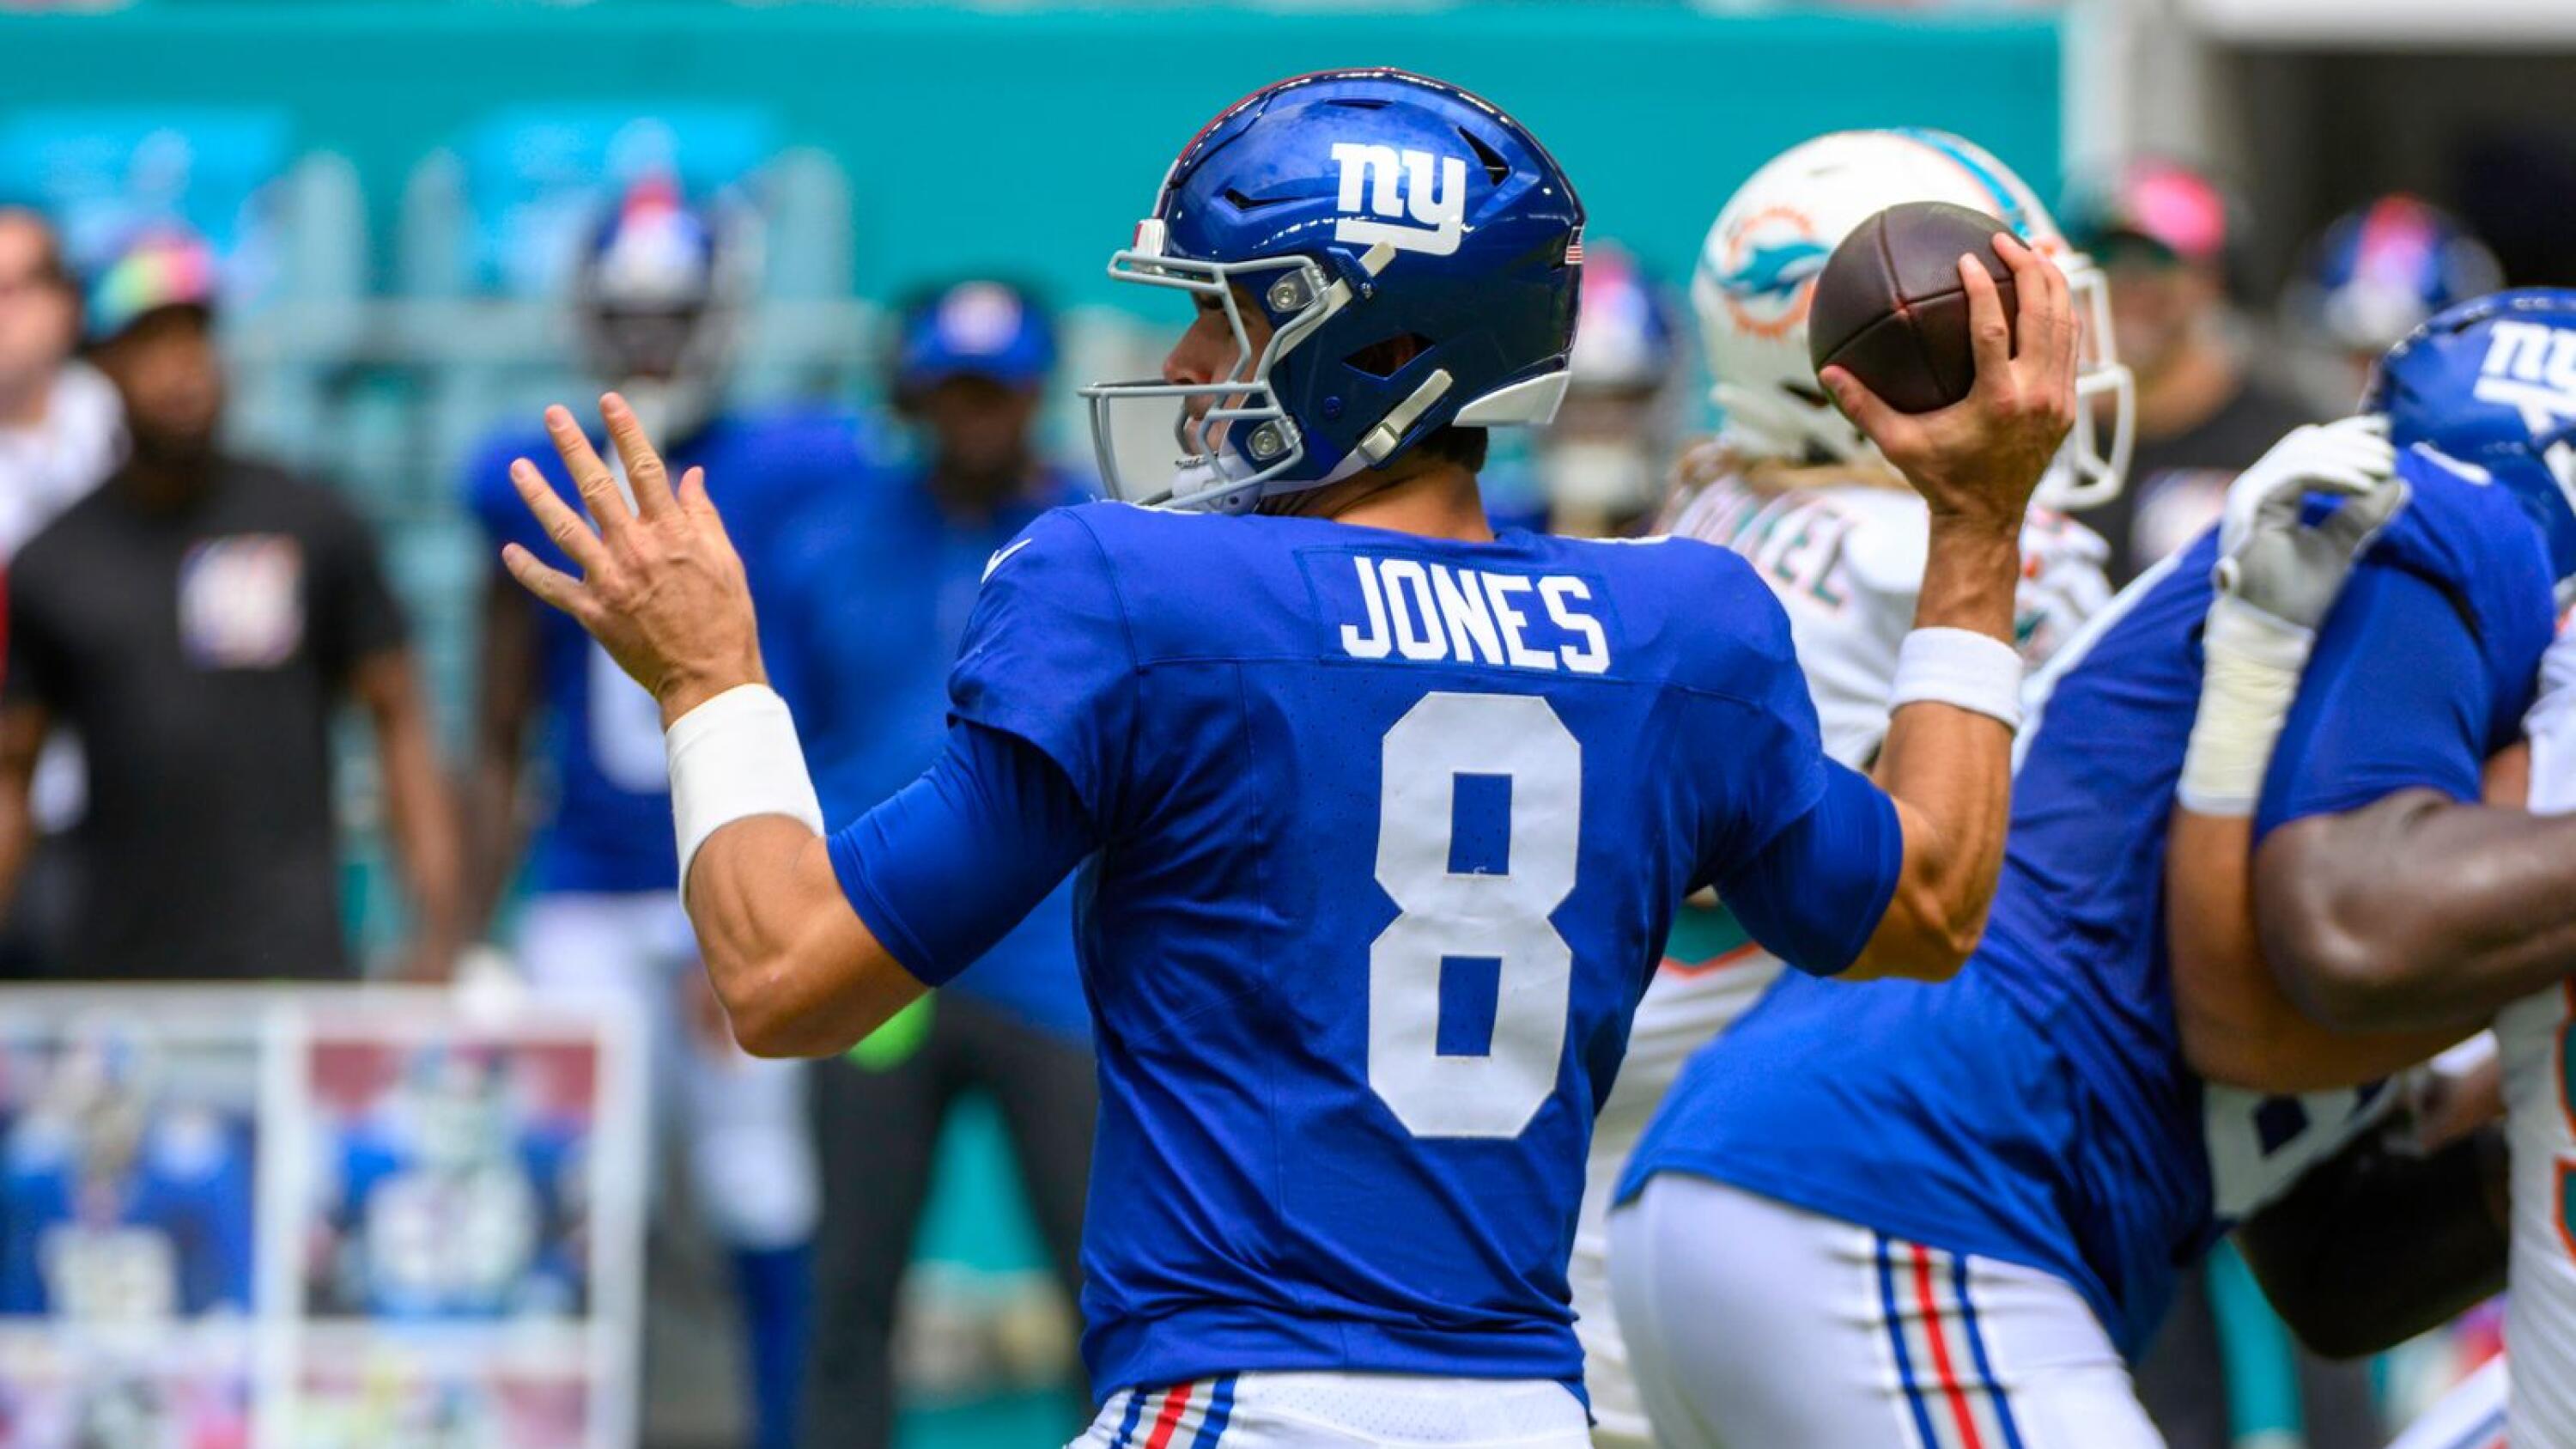 NFL: Daniel Jones out for the season, New York Giants' QB